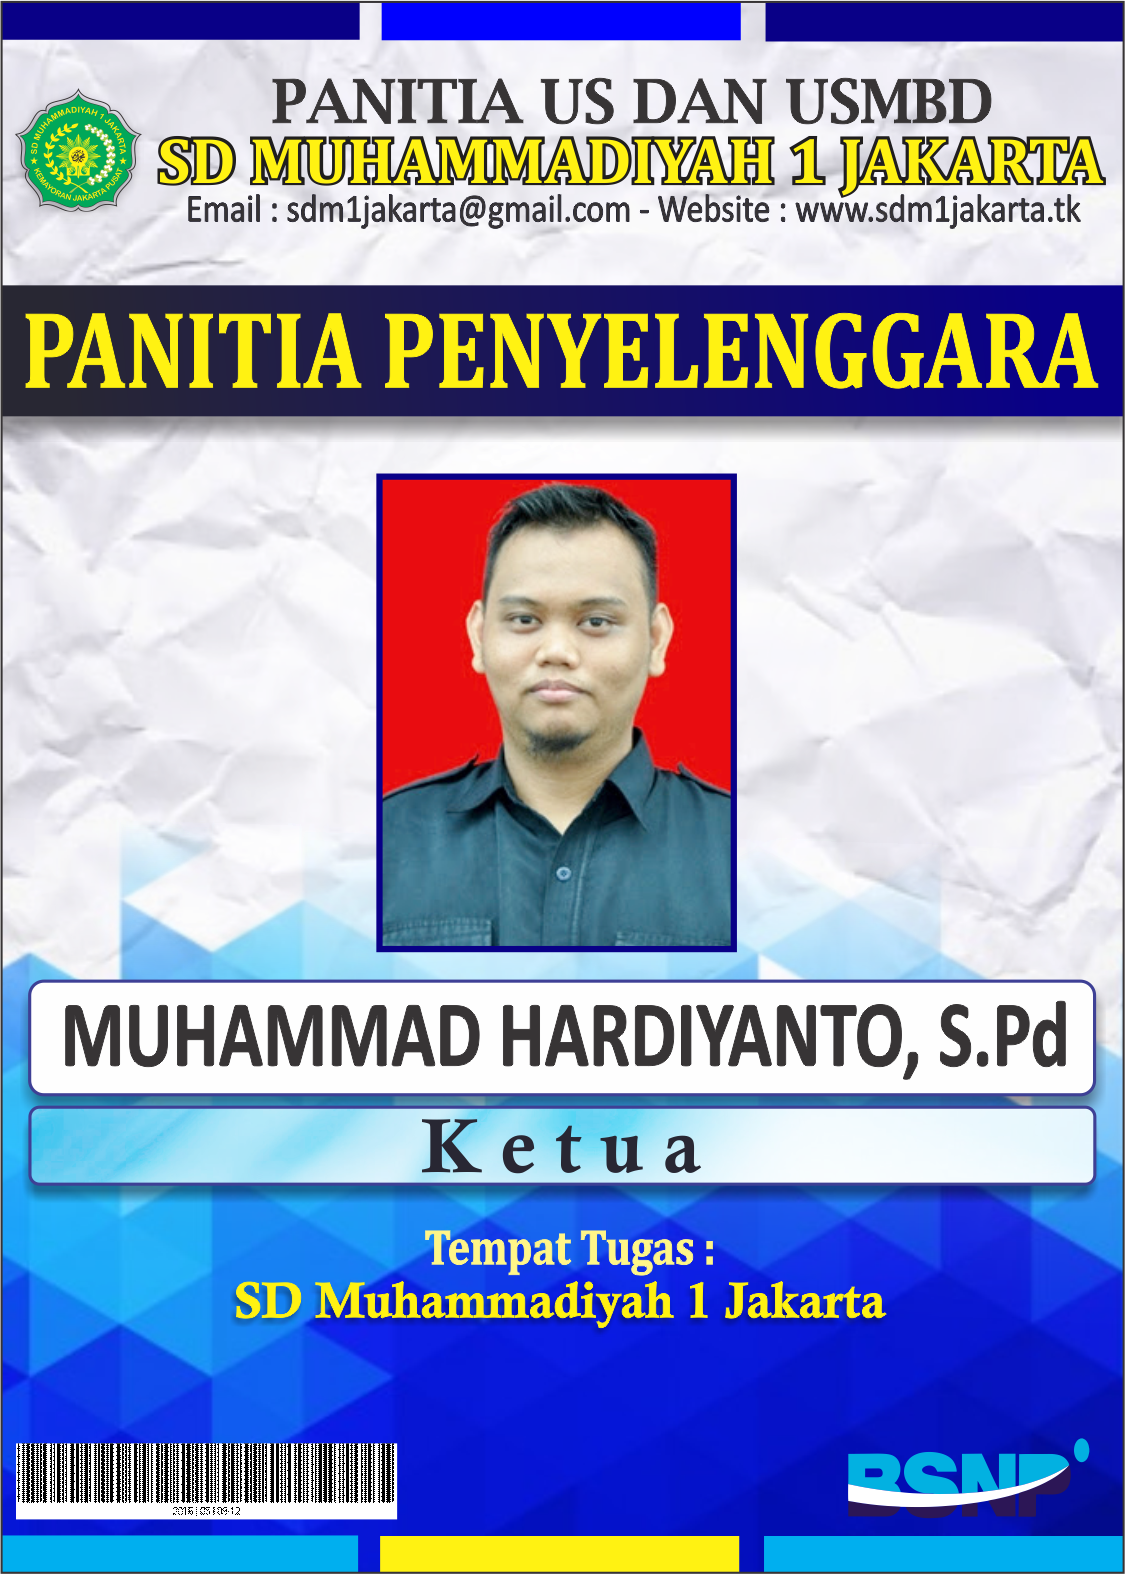  Desain  ID  Card  Panita US MBD SD Muhammadiyah 1 Jakarta